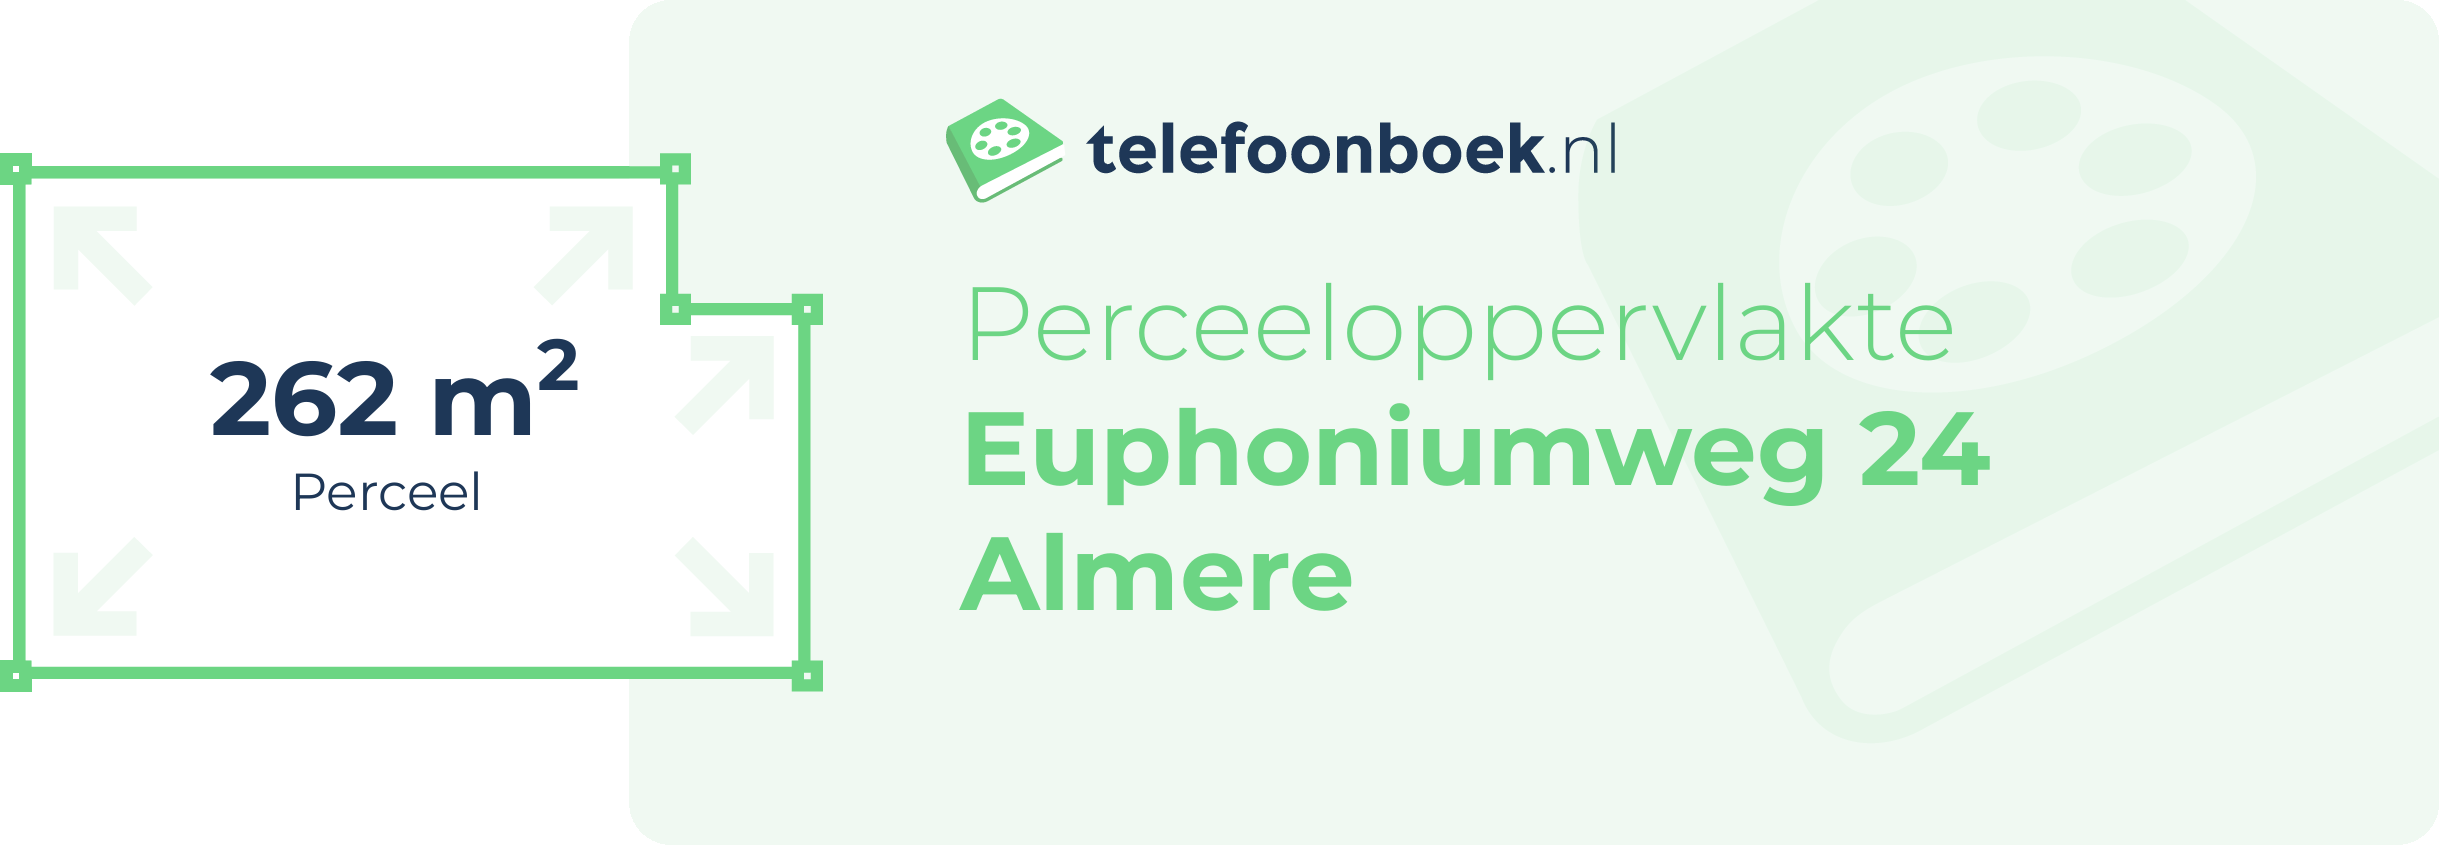 Perceeloppervlakte Euphoniumweg 24 Almere